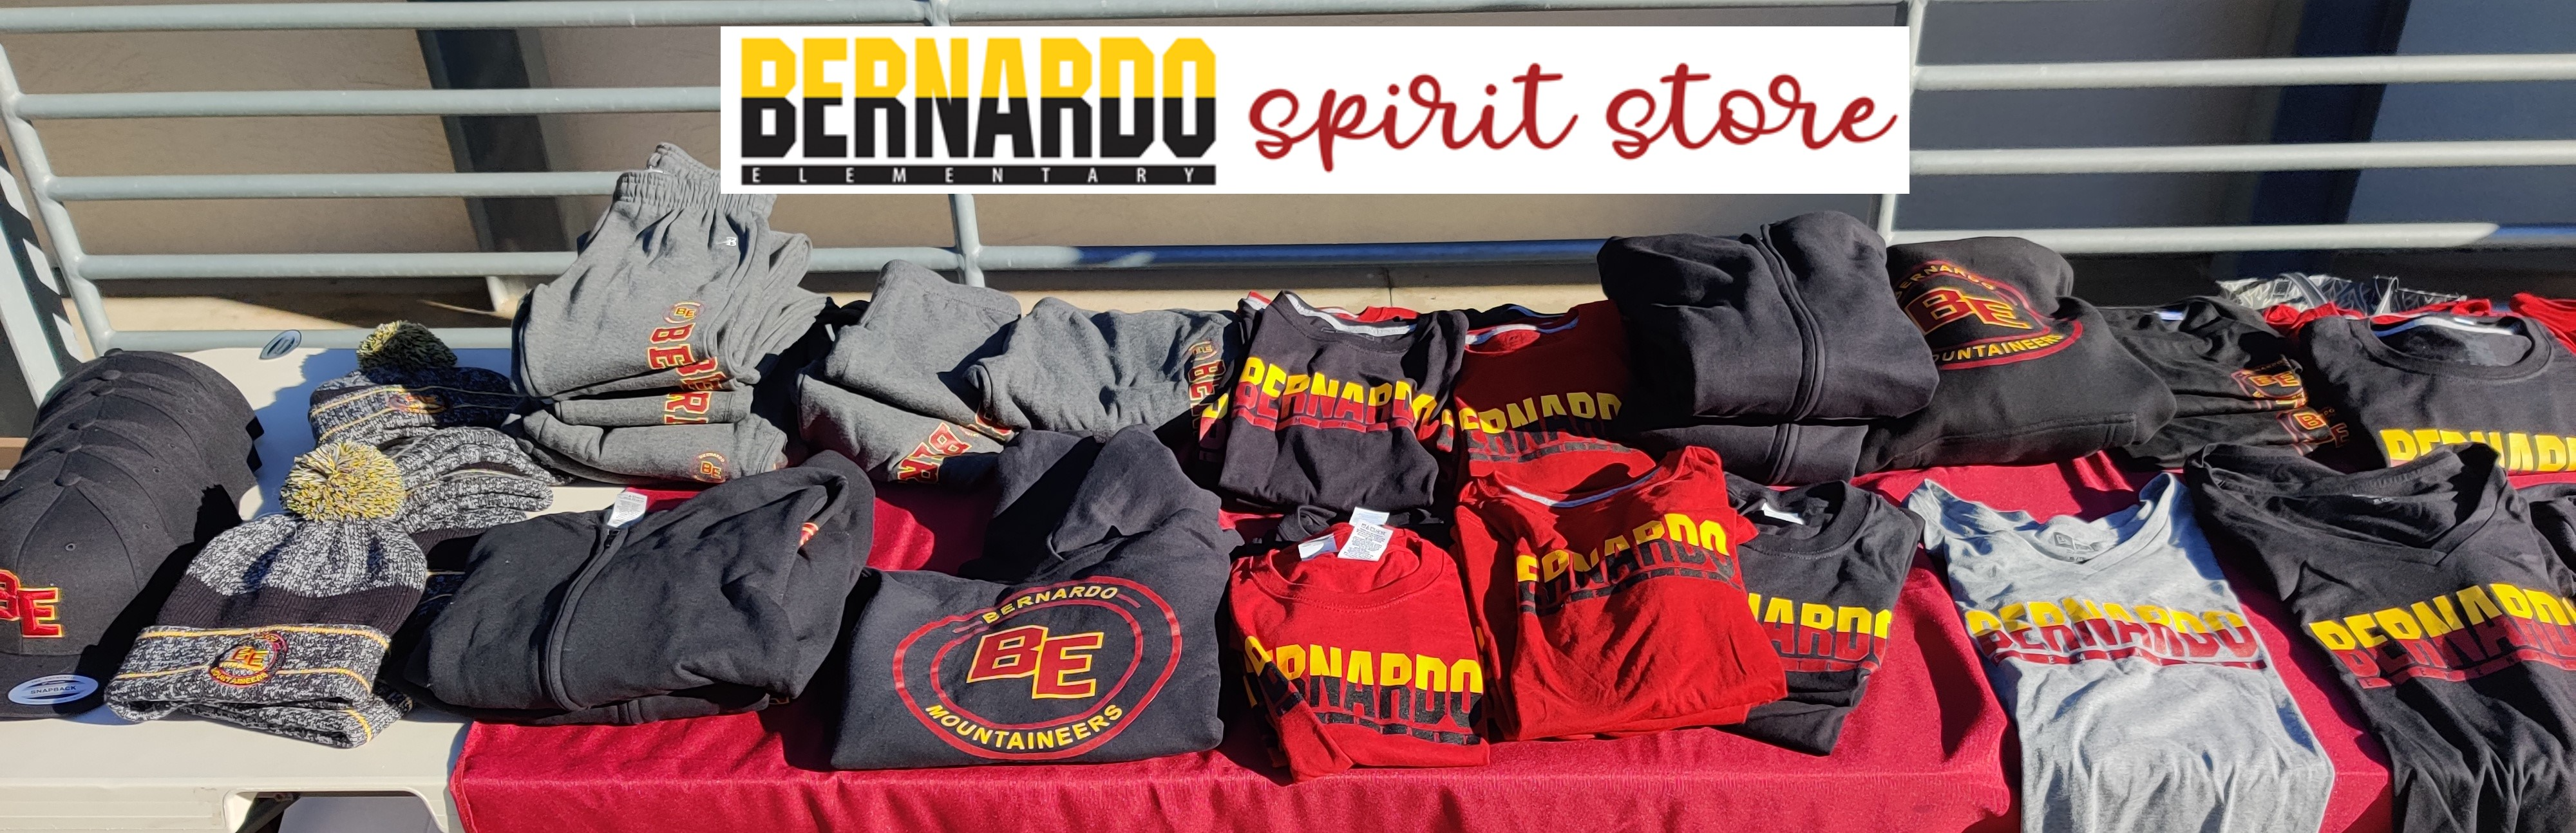 Bernardo Spirit Wear Store showing table of spirit wear clothing.